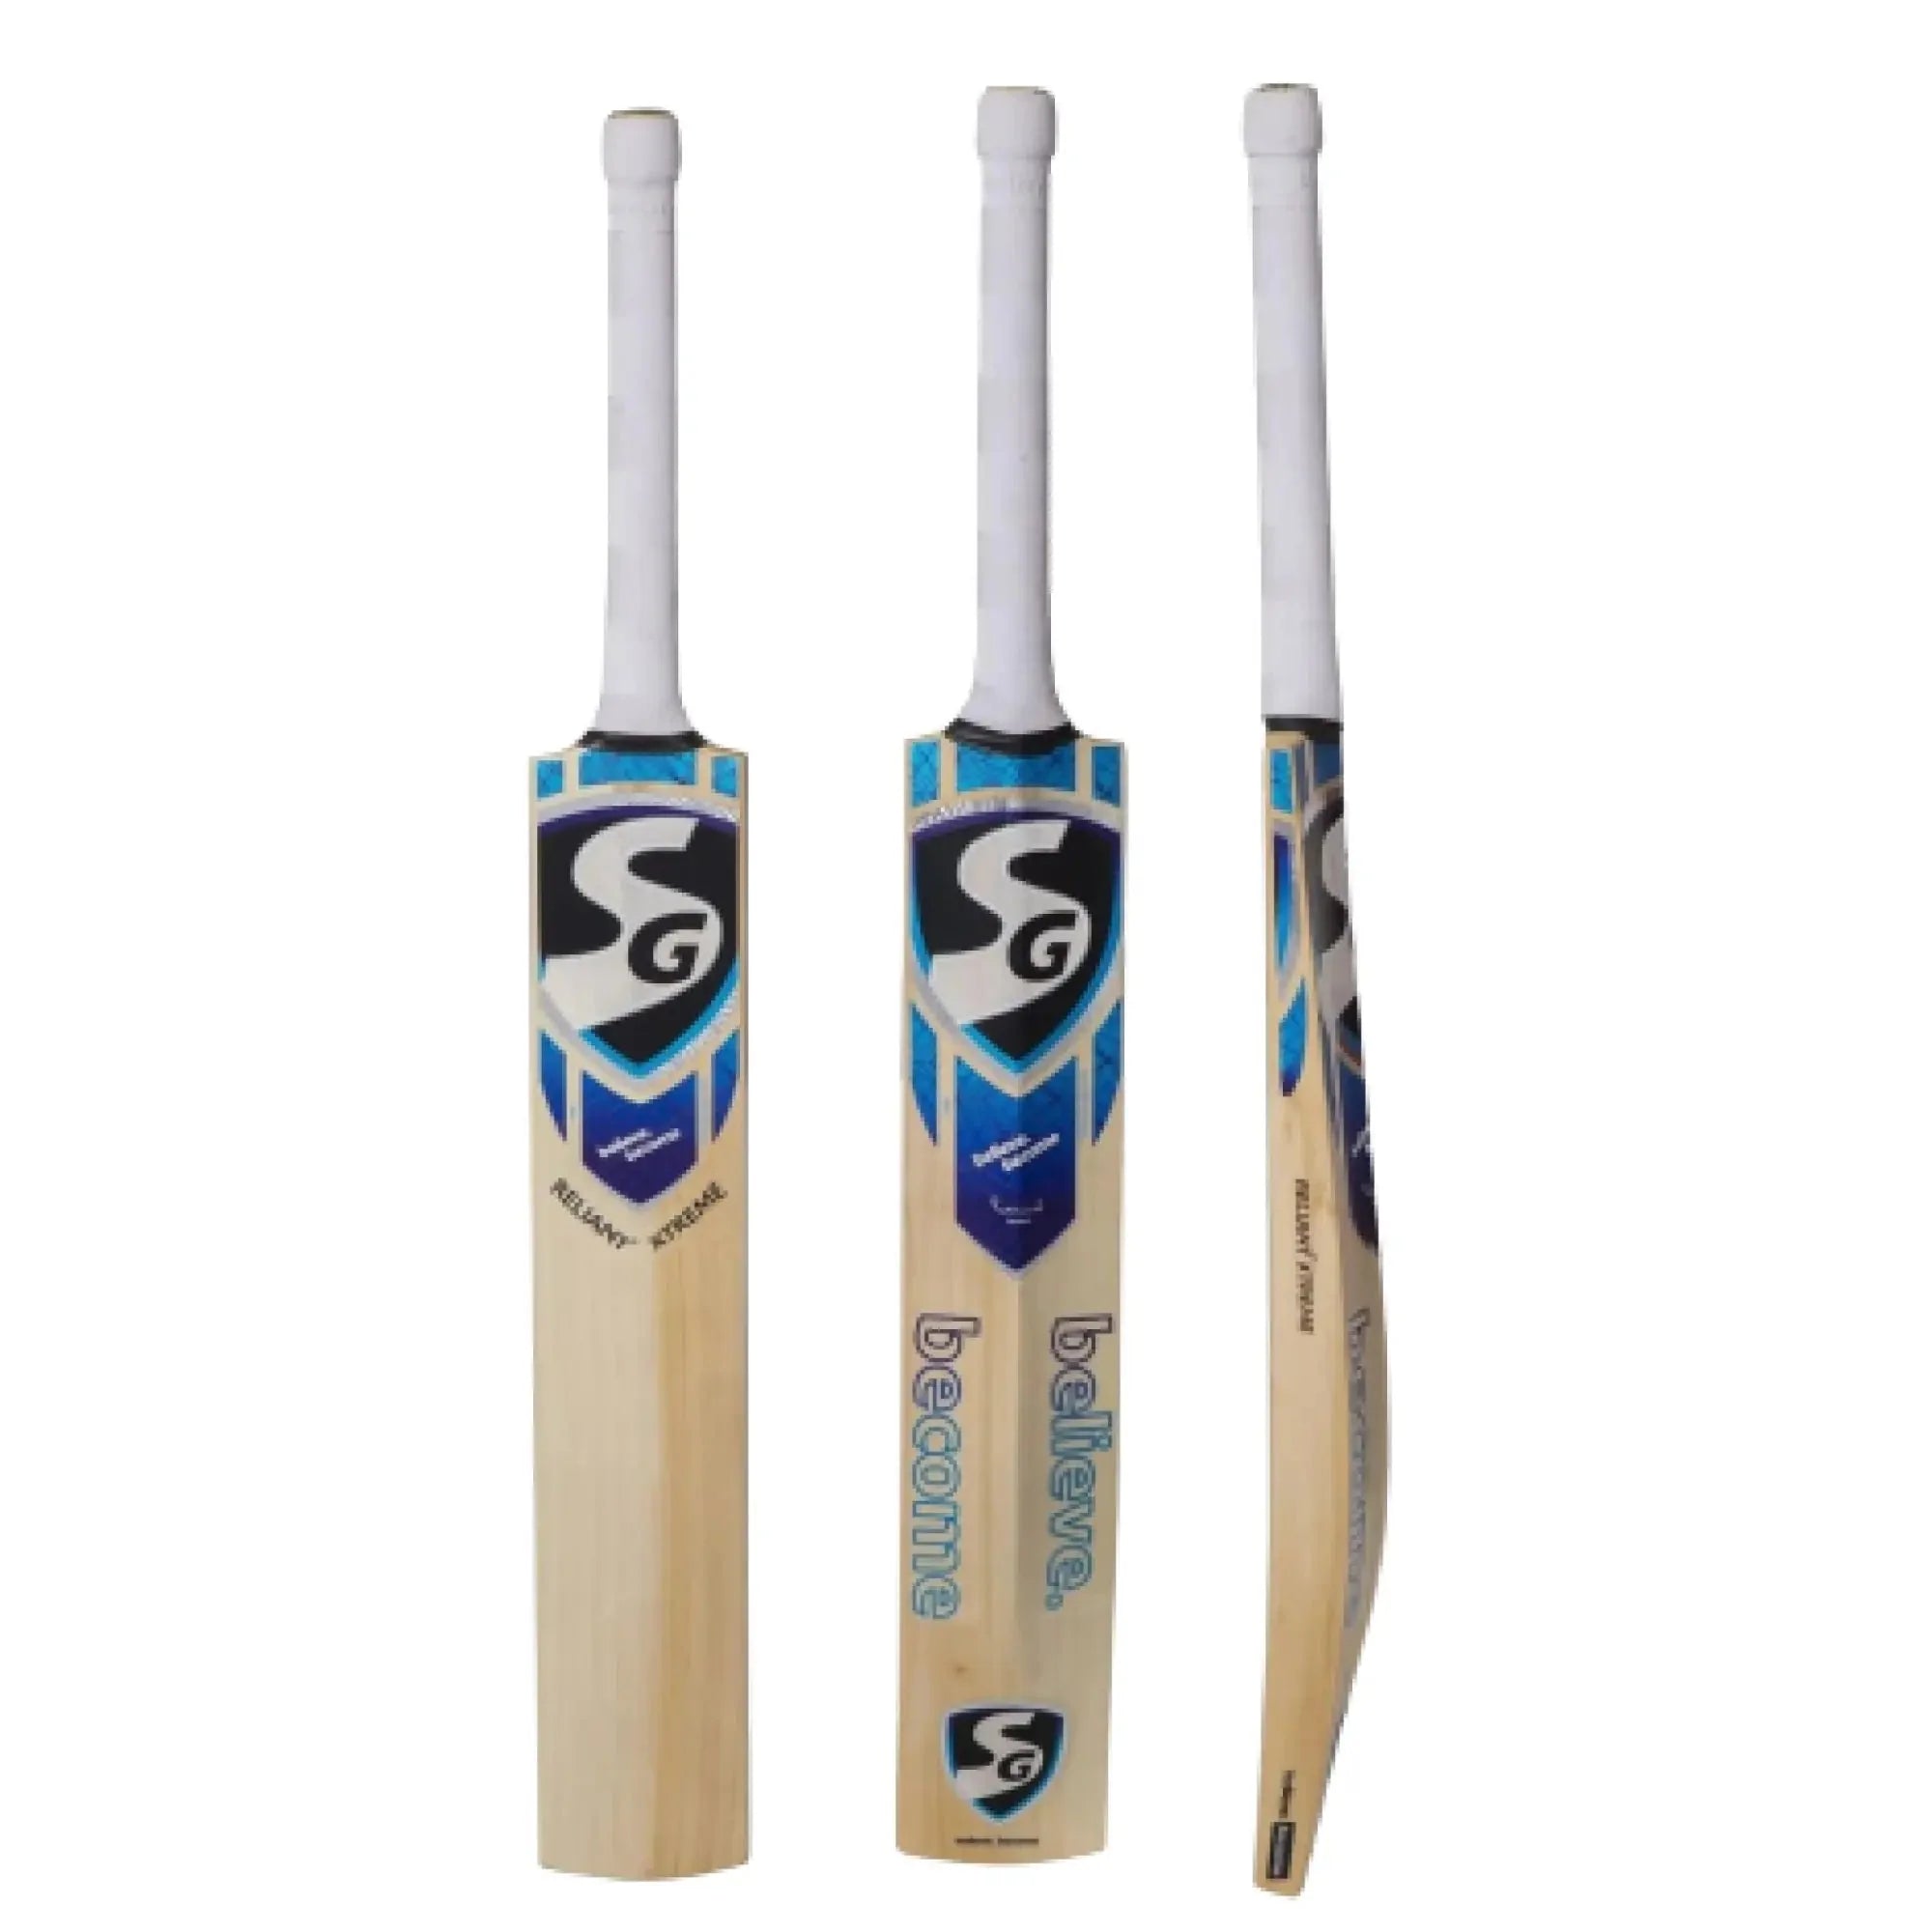 SG Reliant Xtreme Cricket Bat English willow - Short Handle - BATS - MENS ENGLISH WILLOW